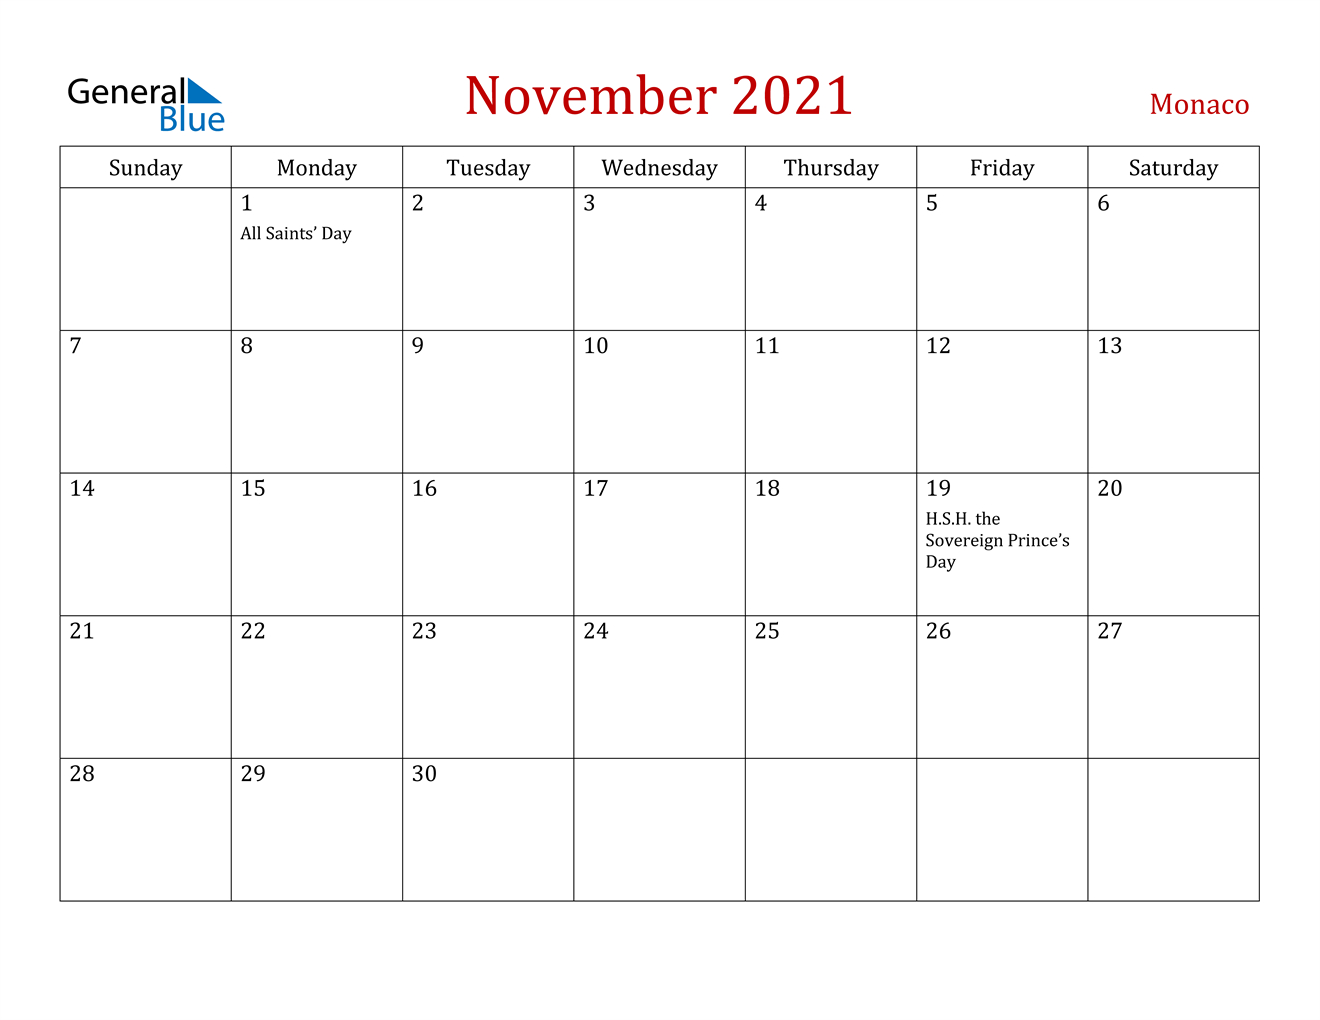 November 2021 Calendar - Monaco